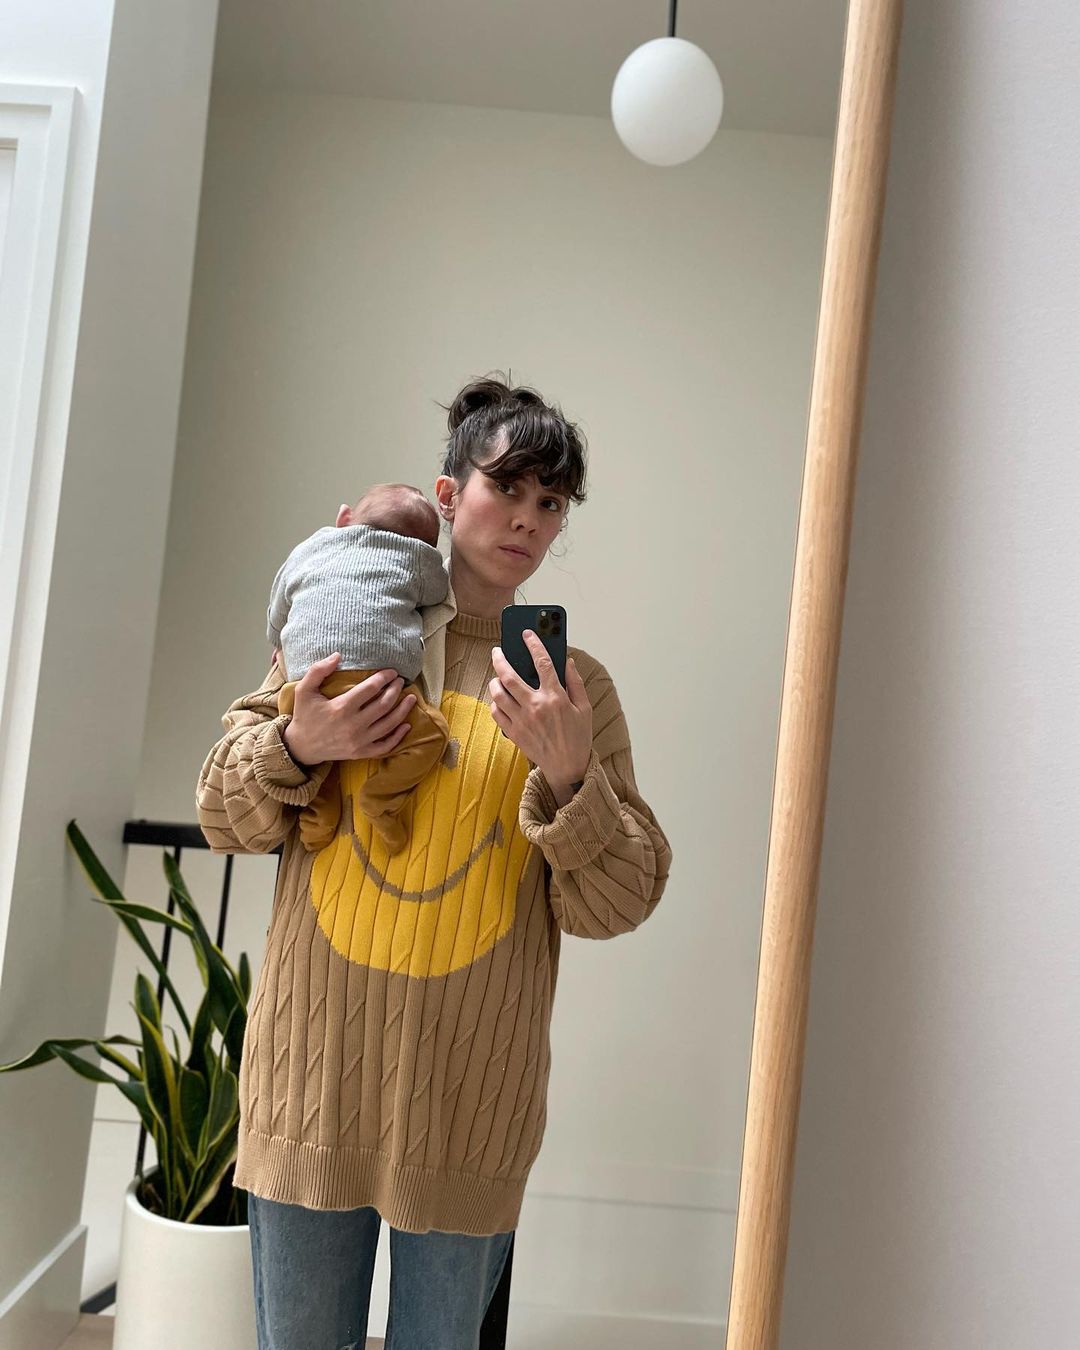 Sara Quin with newborn baby via @TeganandSara on Instagram